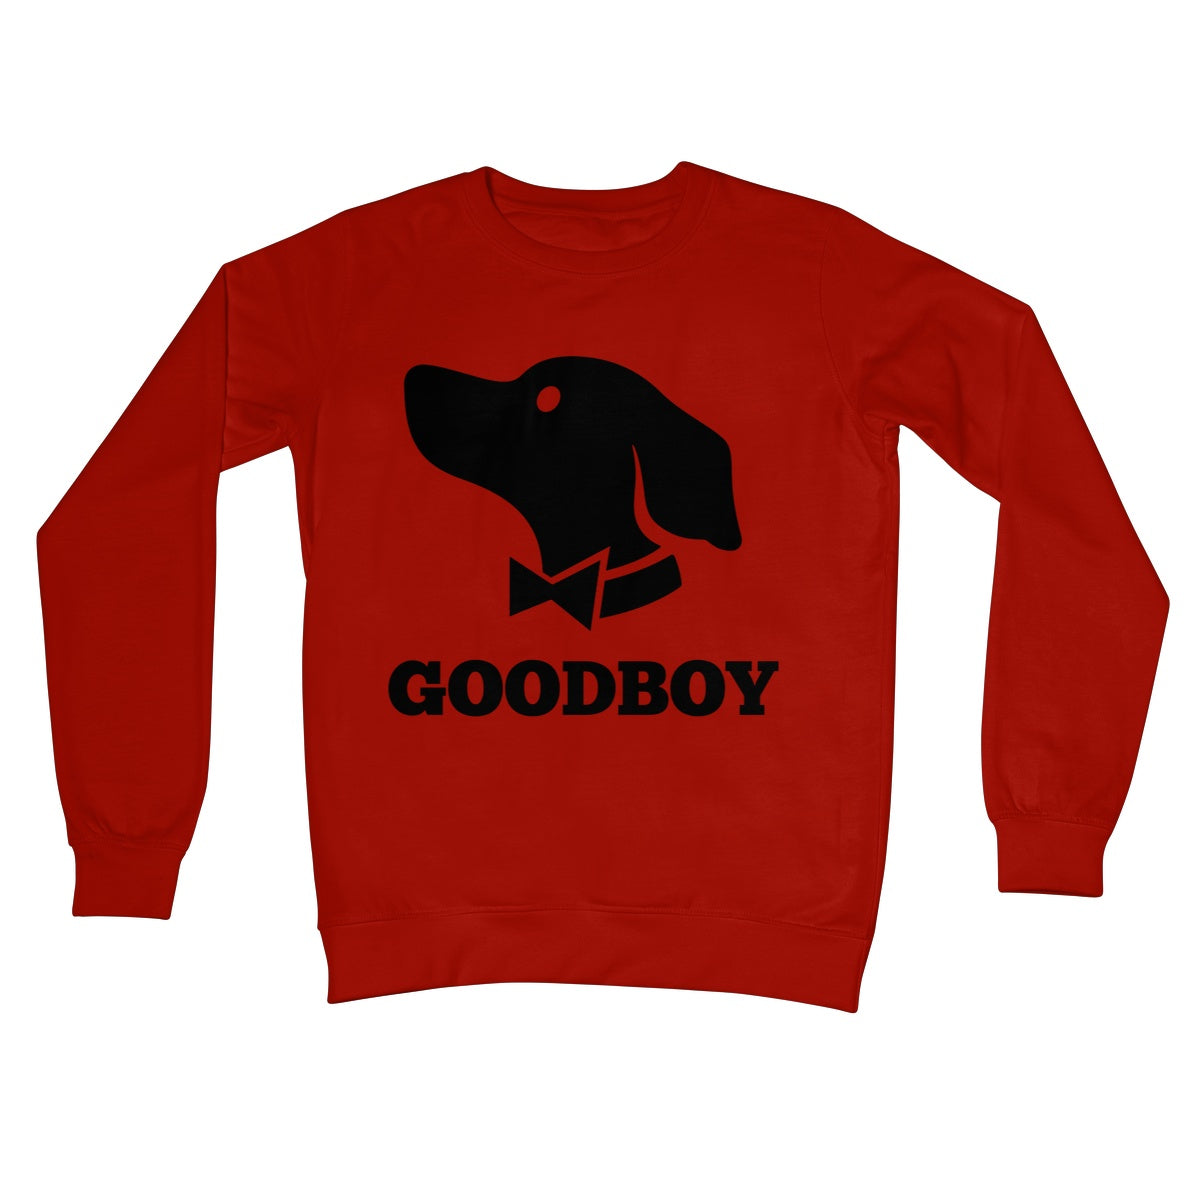 goodboy jumper red